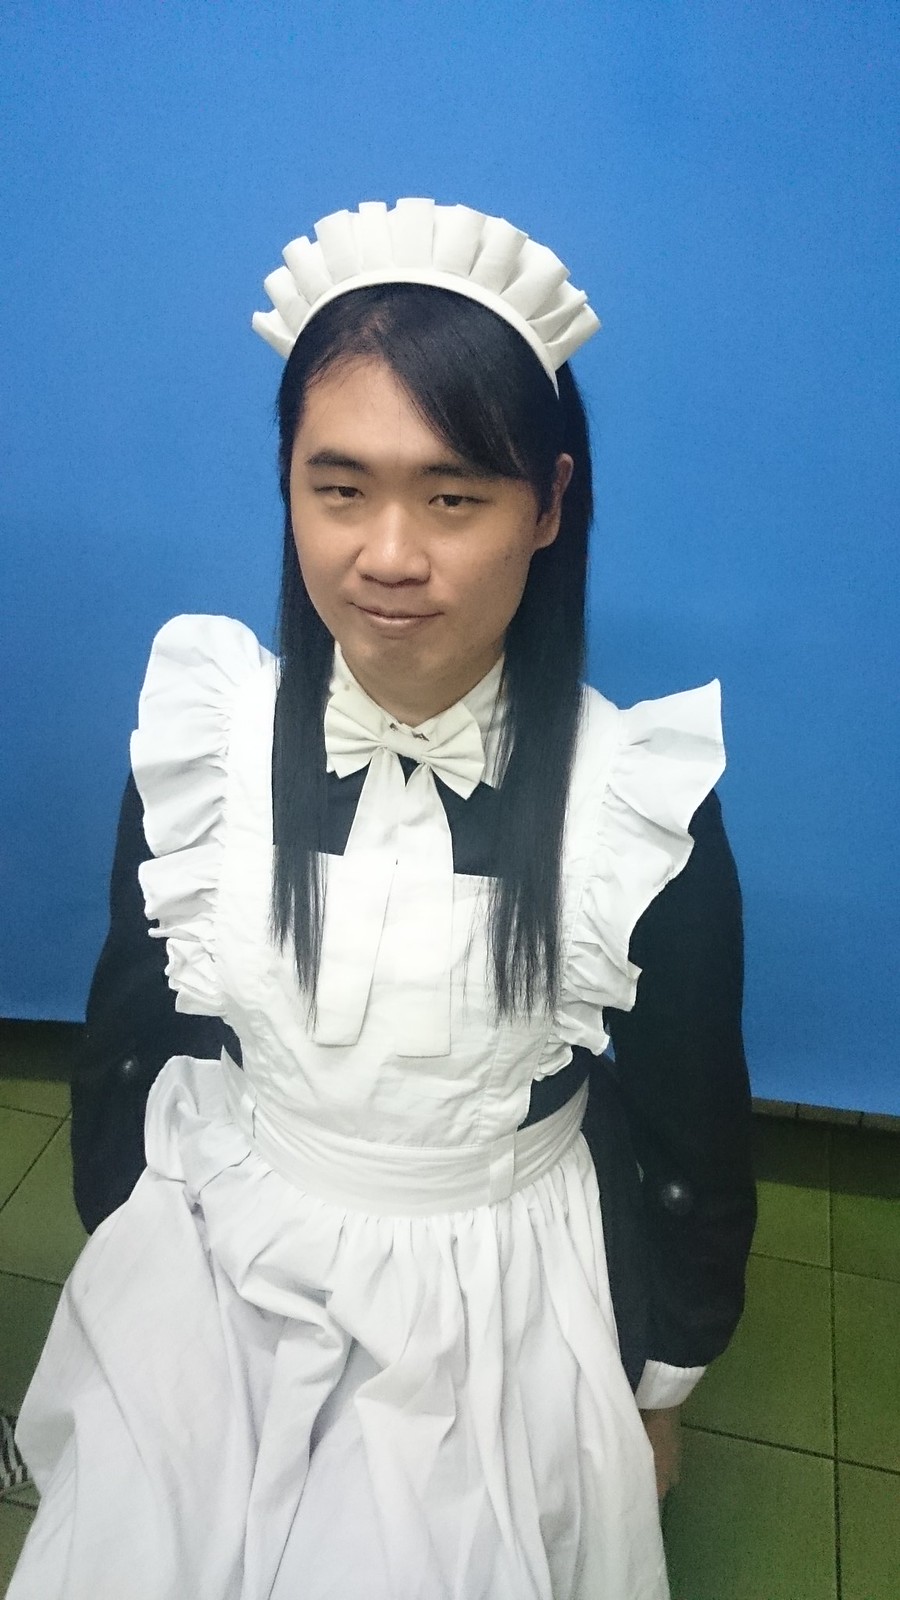 chris' latest maid costume